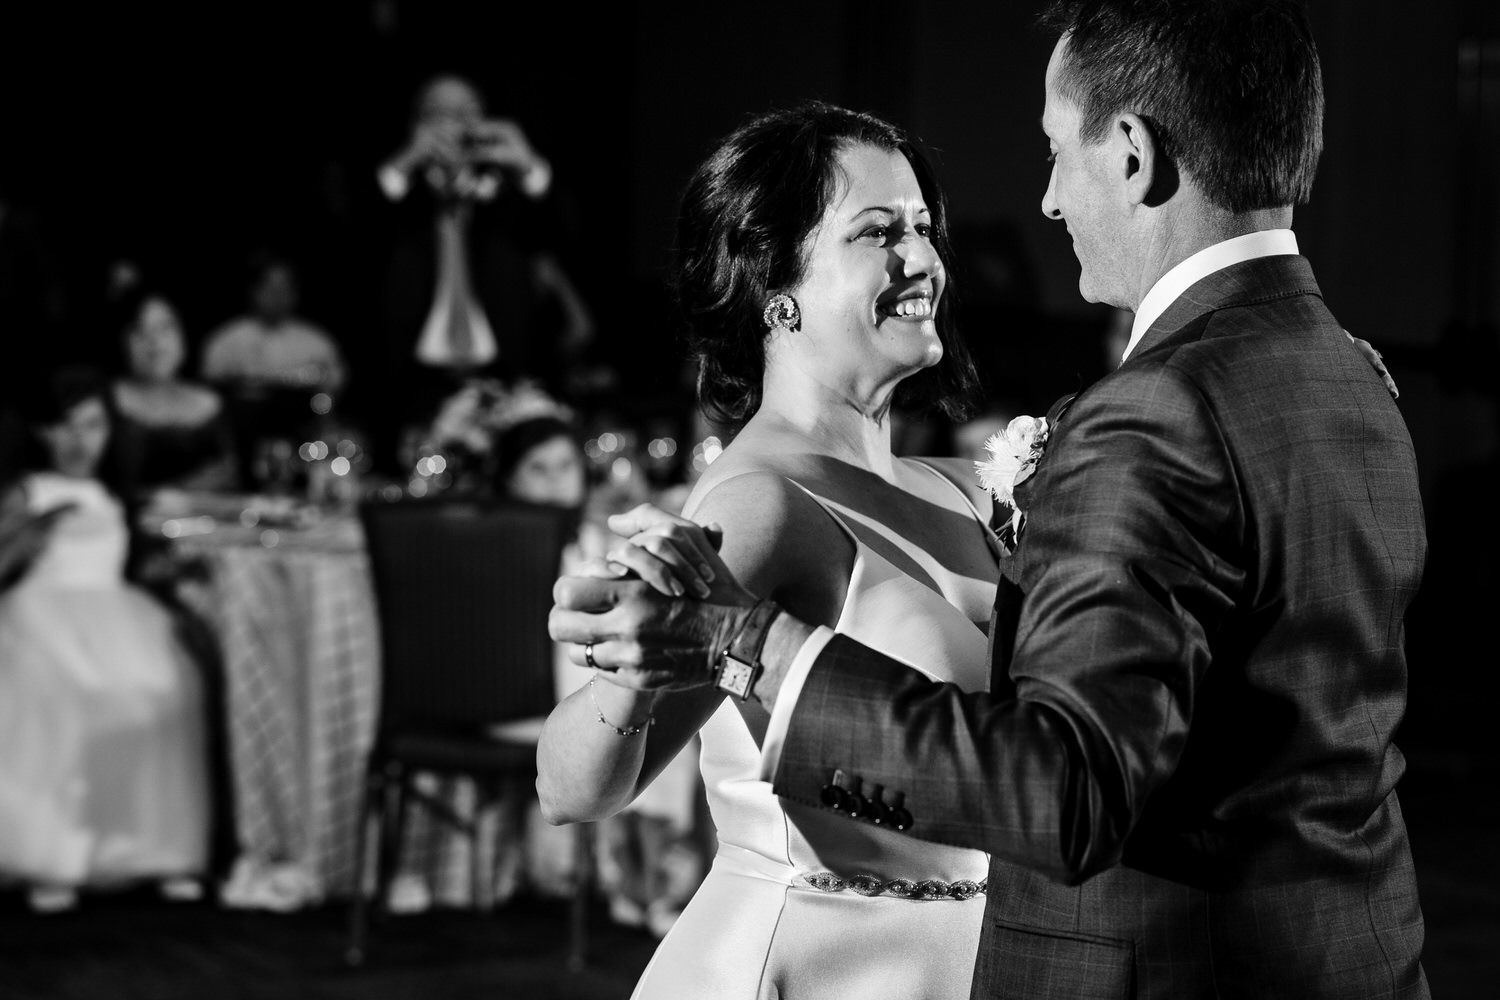 At their Ritz Carlton wedding reception, a bride and groom enjoy their first dance together.